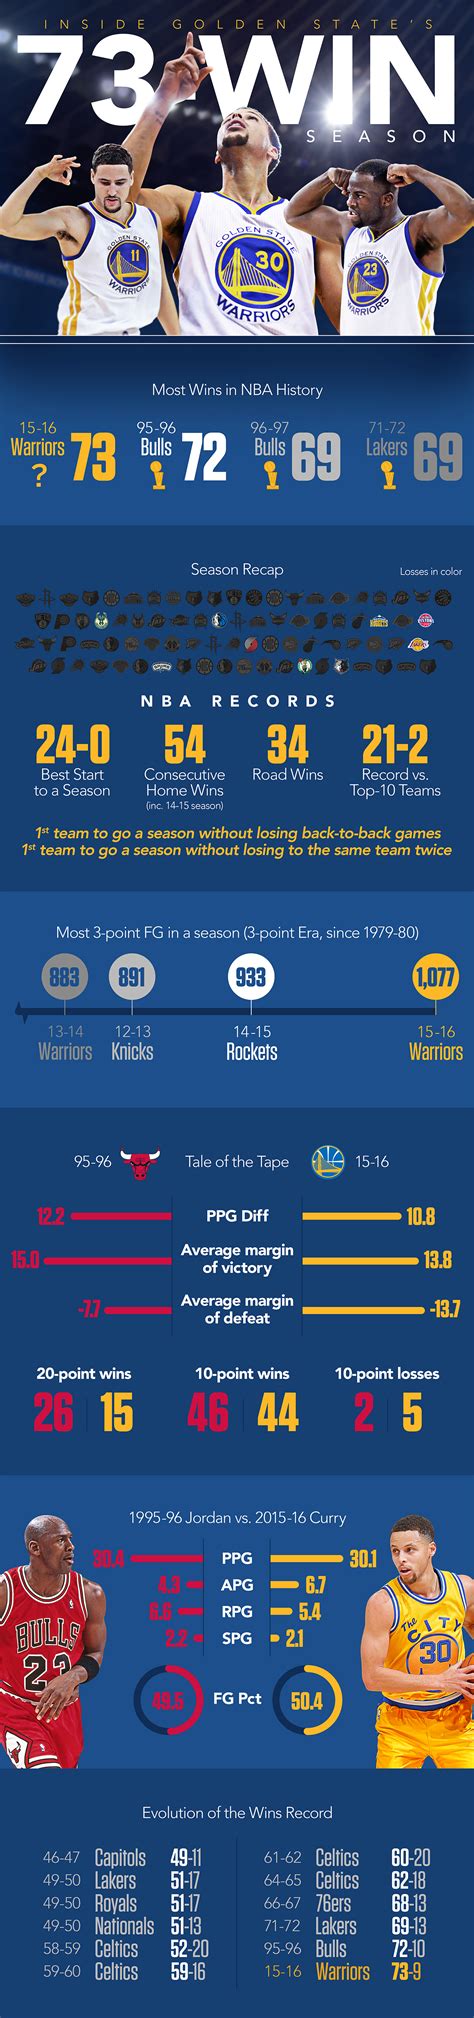 golden state warriors basketball game stats